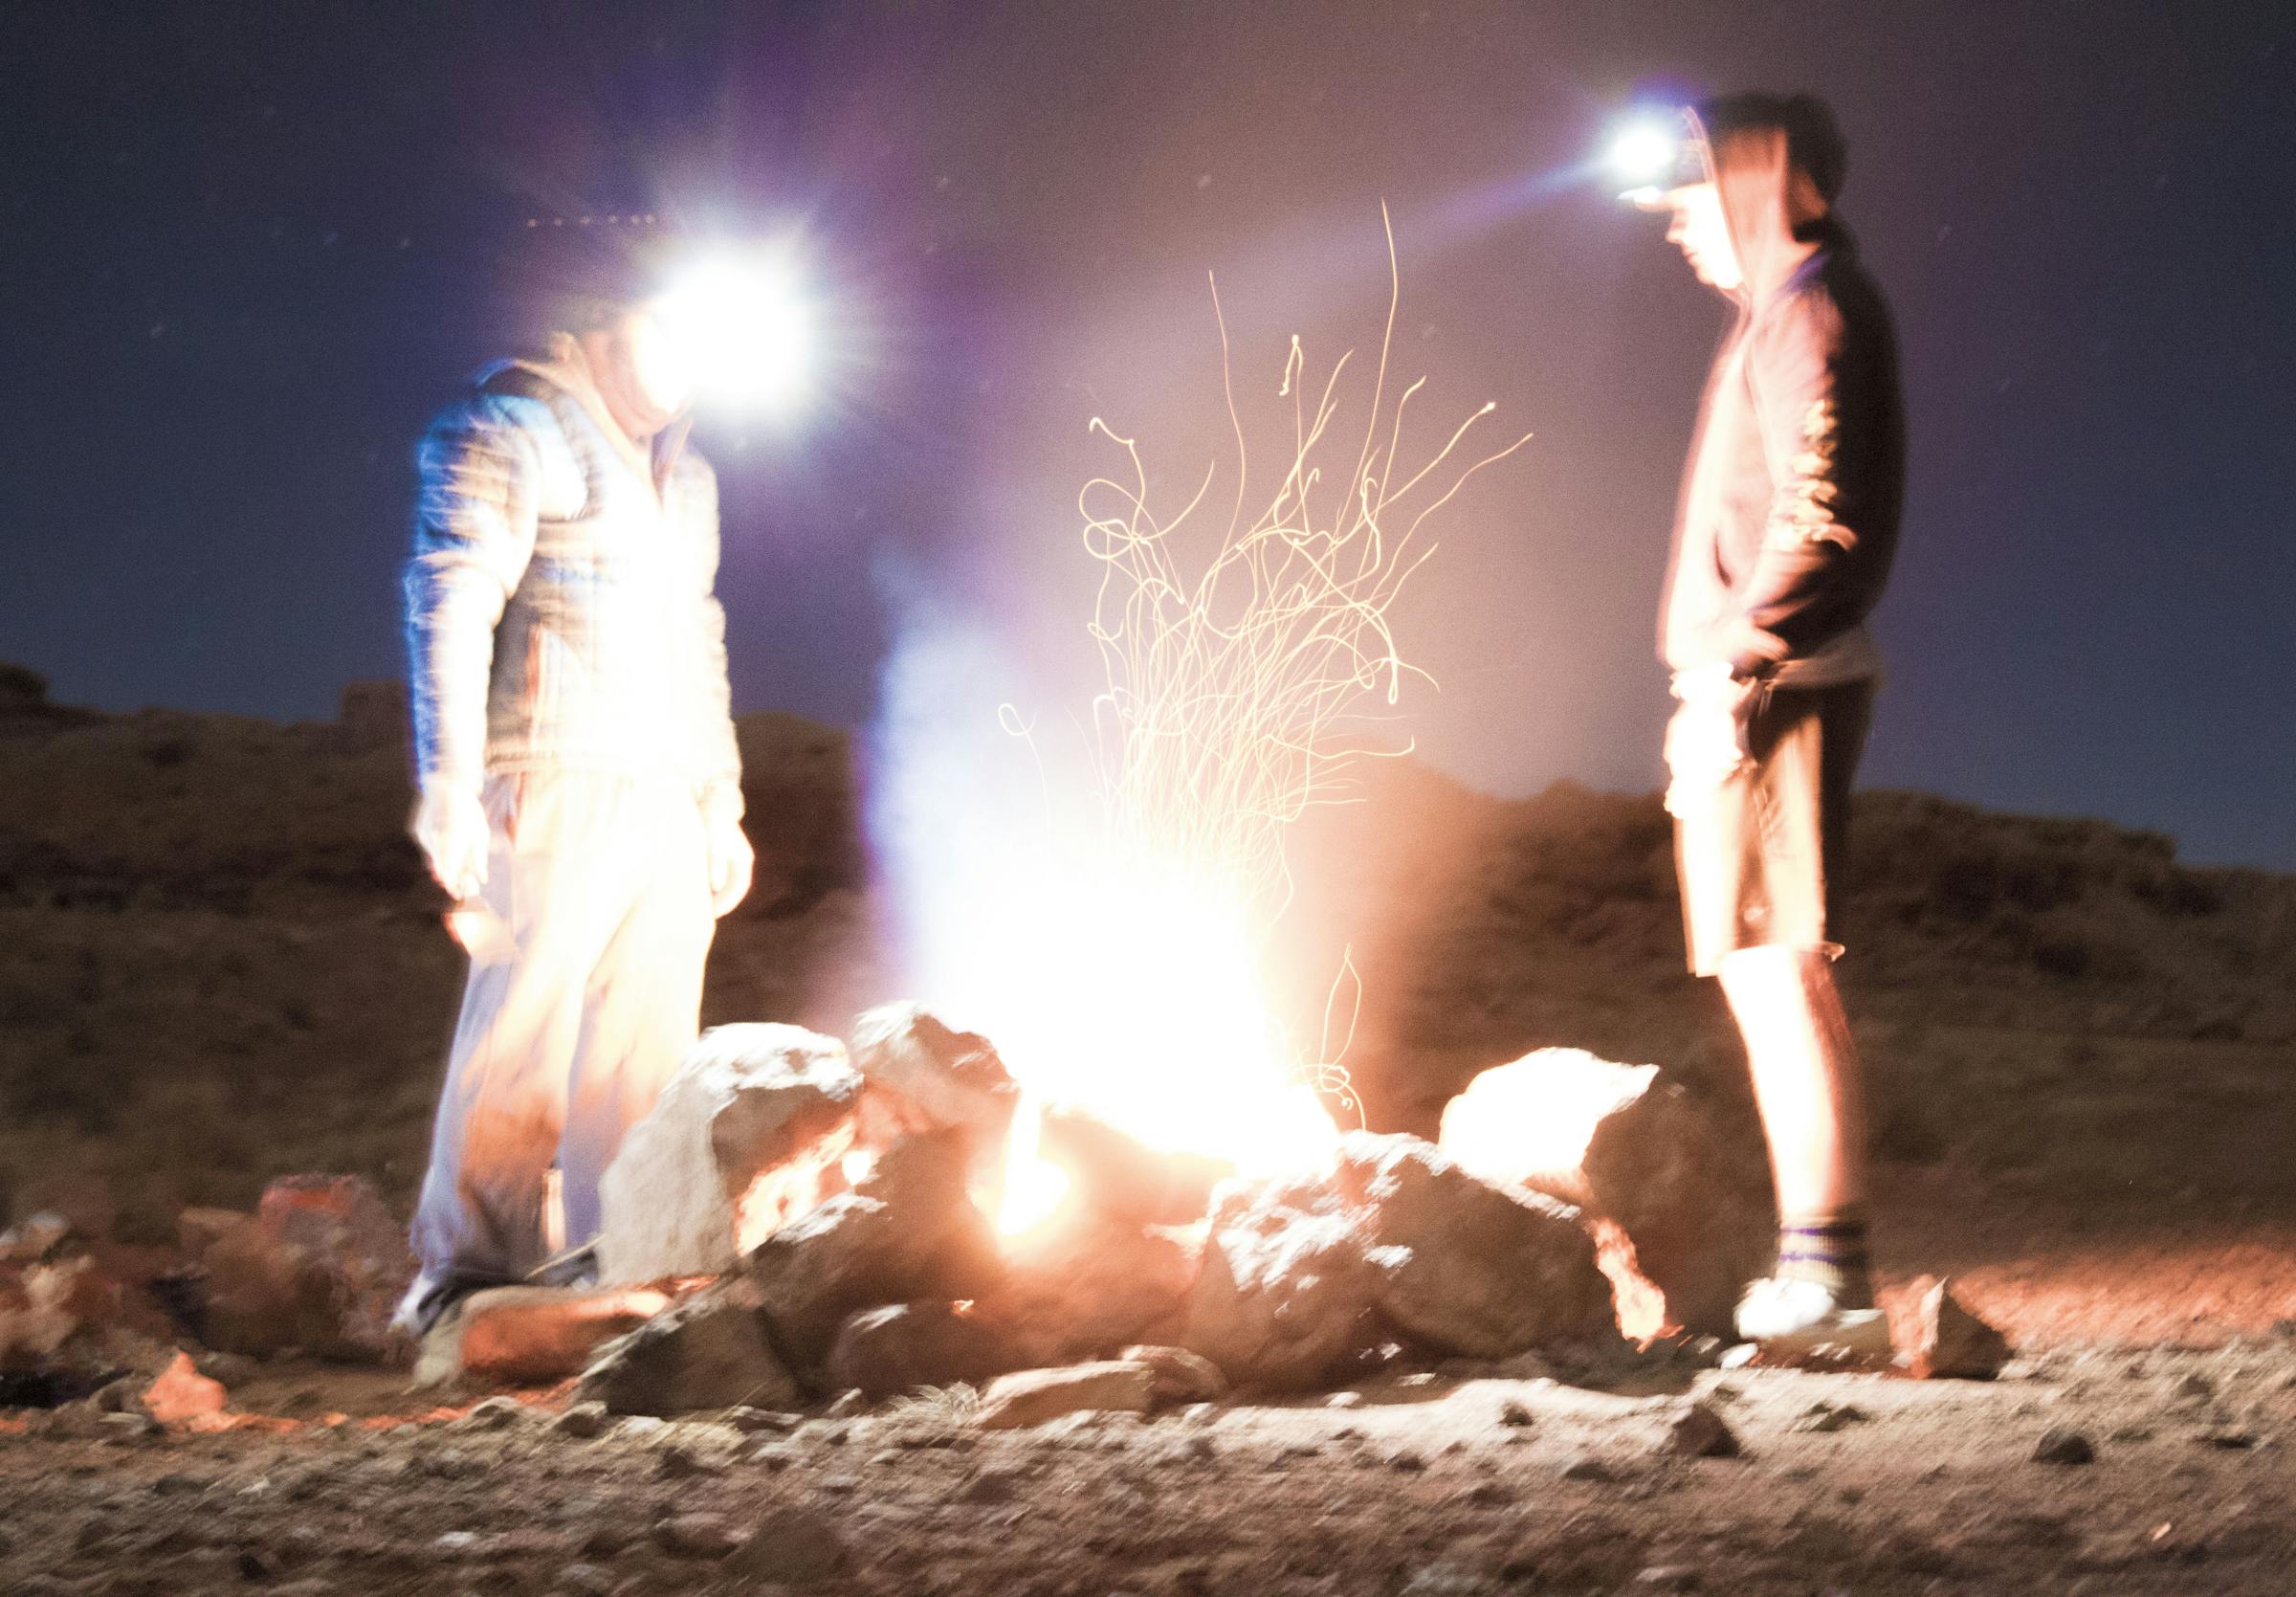 Sparks around a campfire